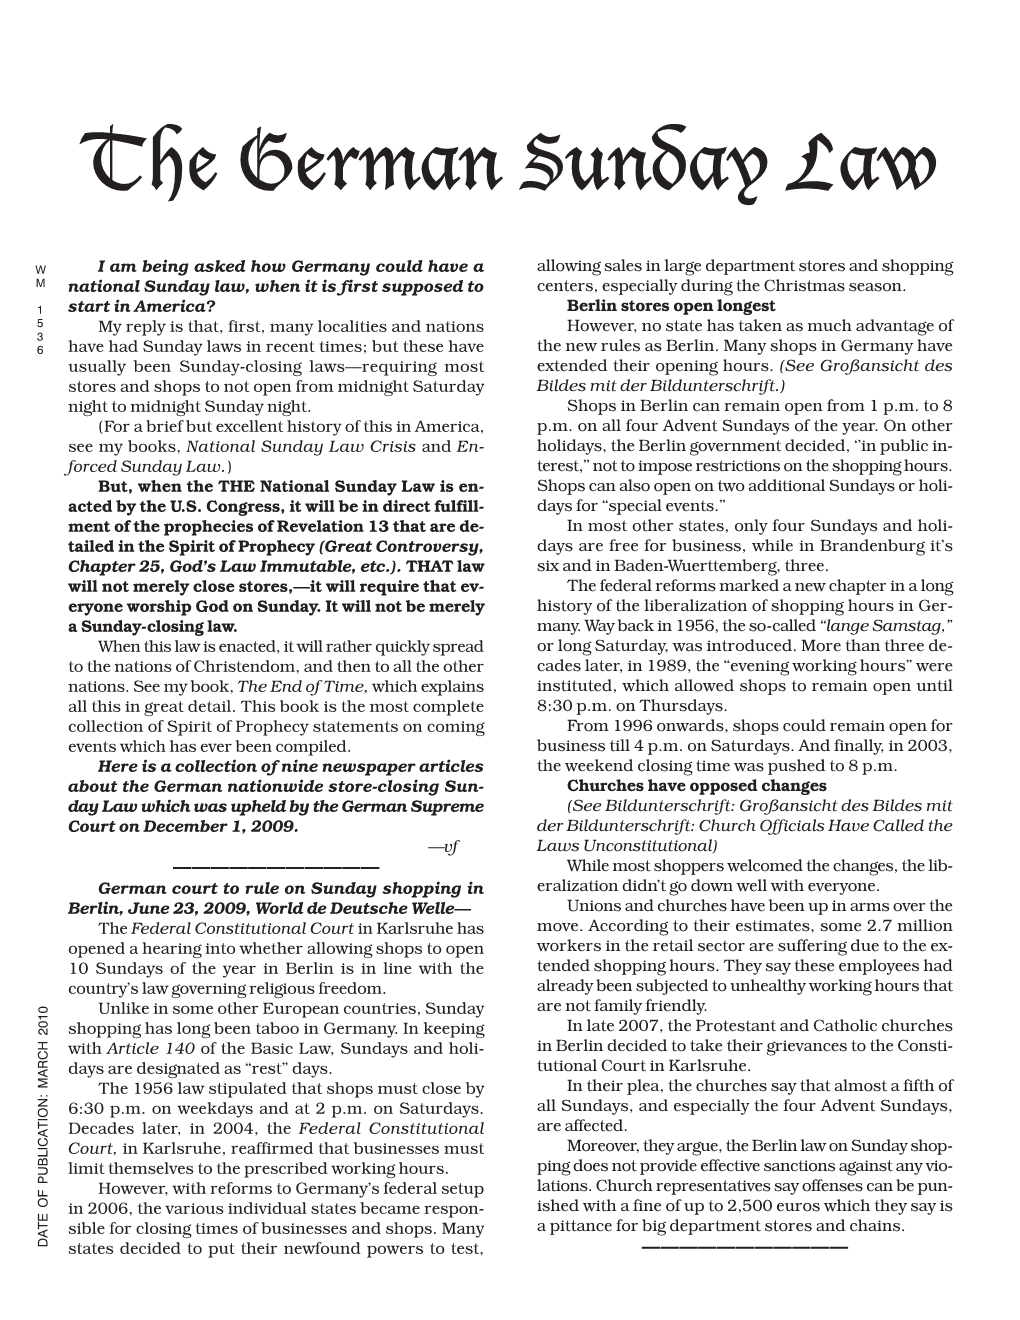 The German Sunday Law